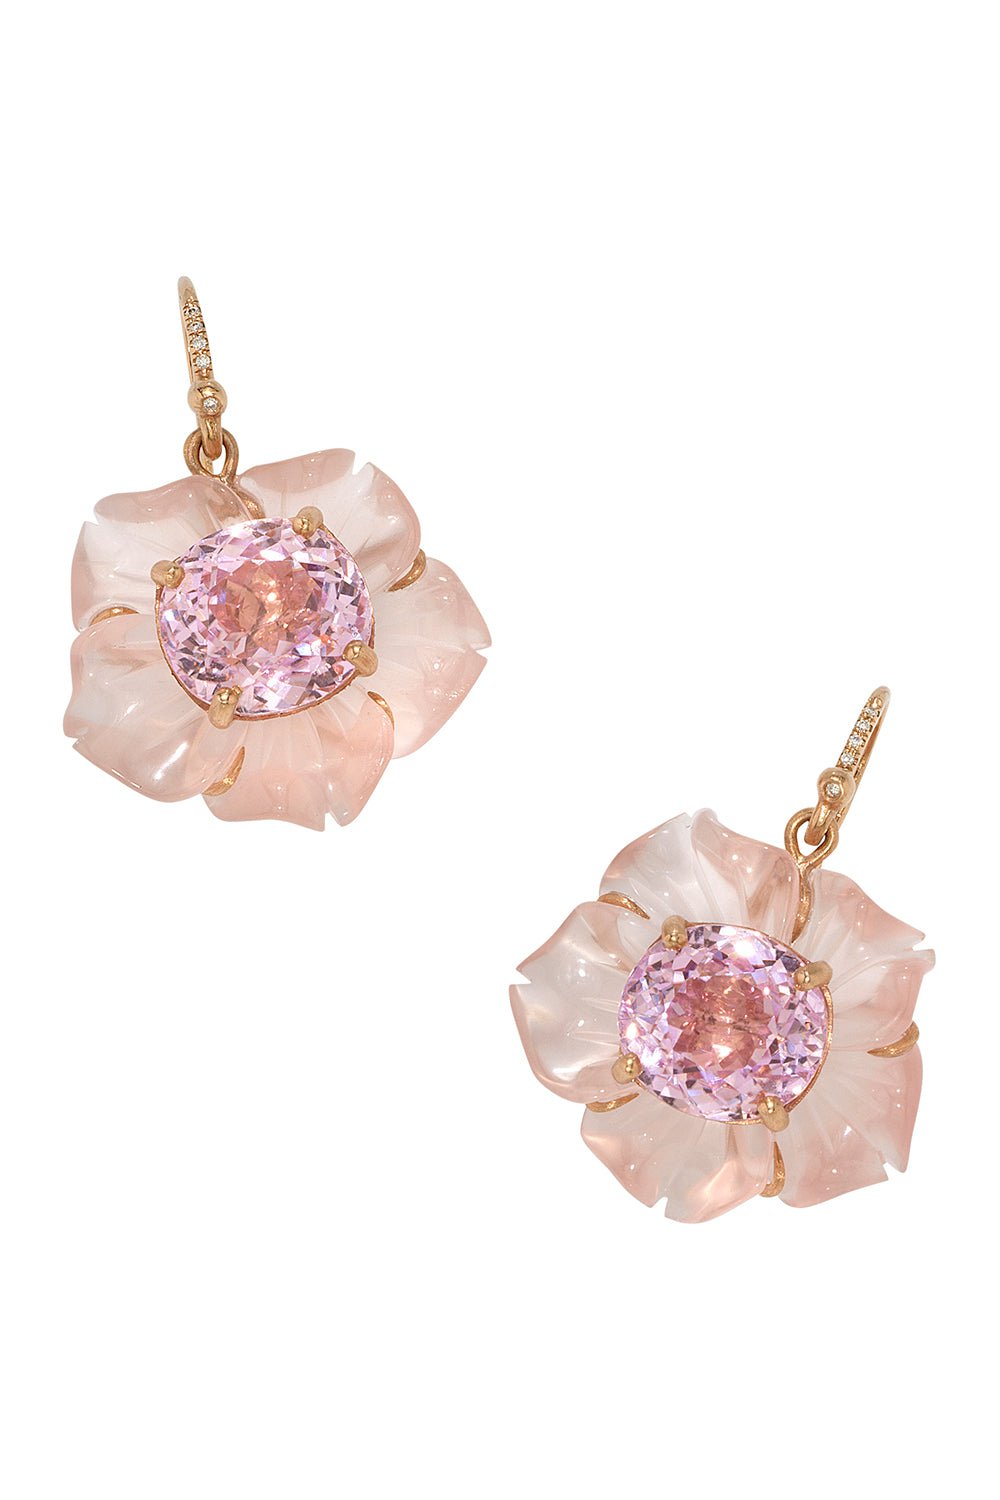 IRENE NEUWIRTH JEWELRY-Tropical Flower Rose Quartz Earrings-ROSE GOLD